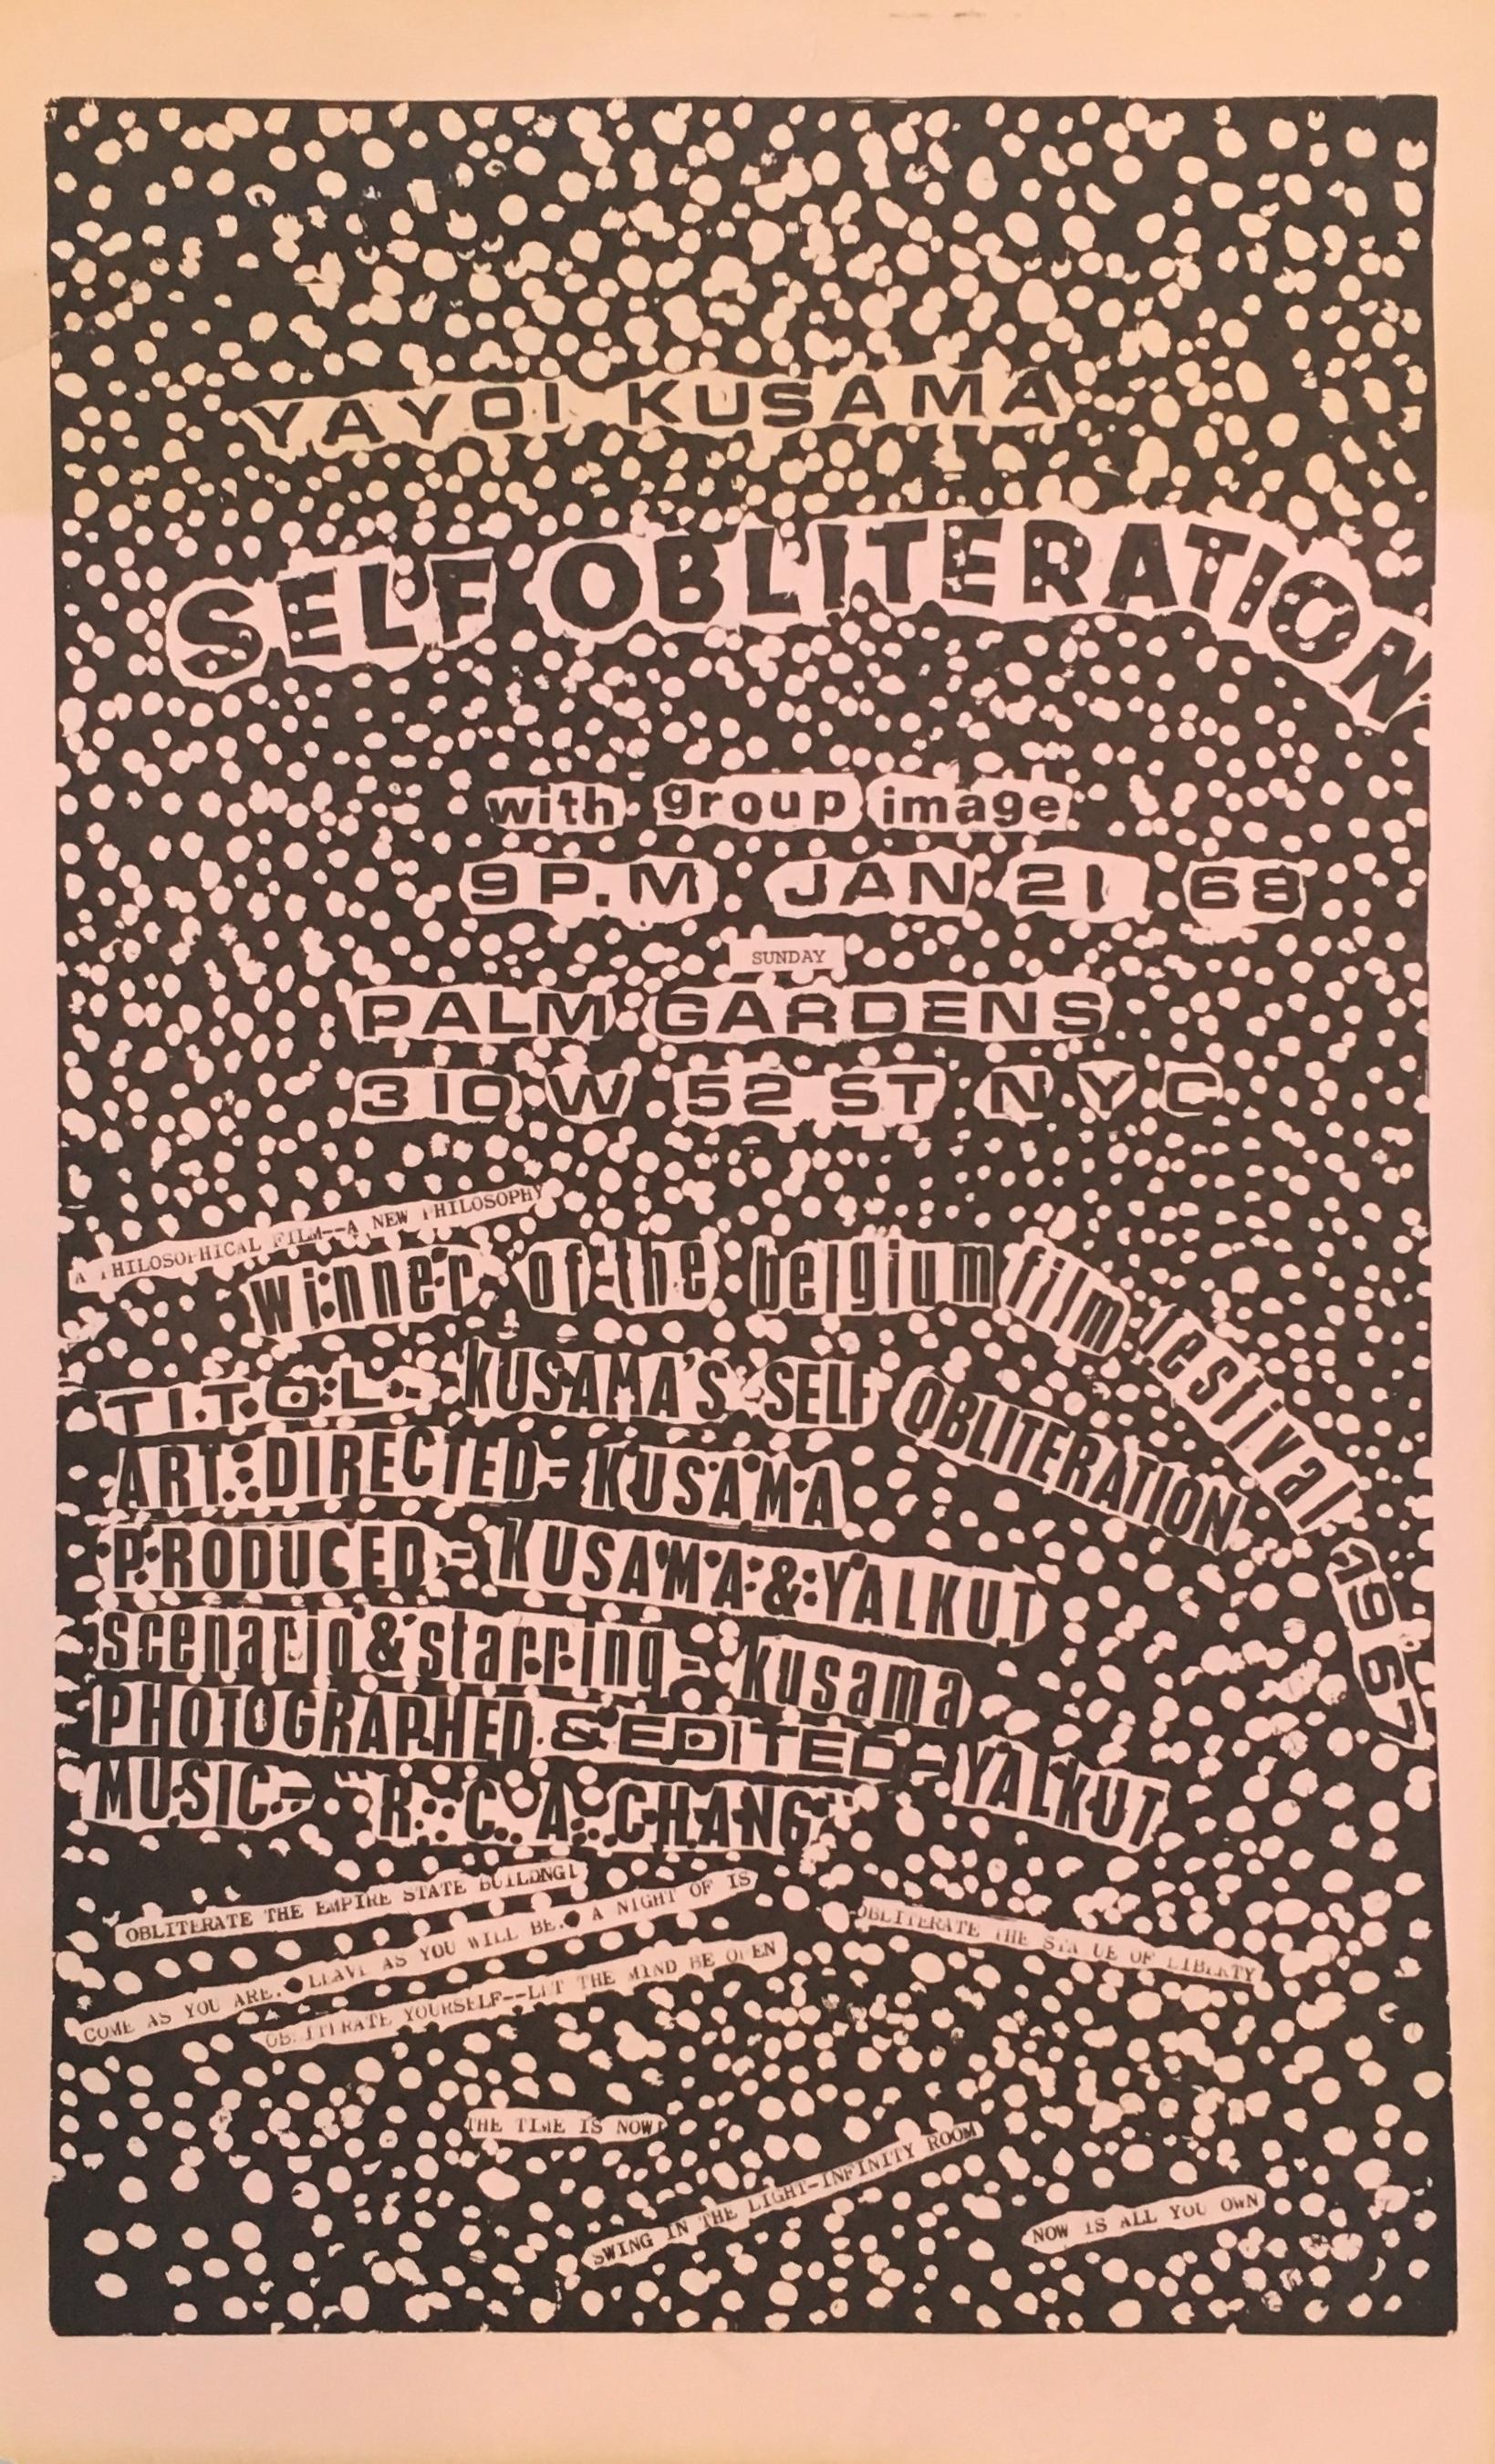 Kusama Selbstdefinition (Ankündigung) – Print von Yayoi Kusama